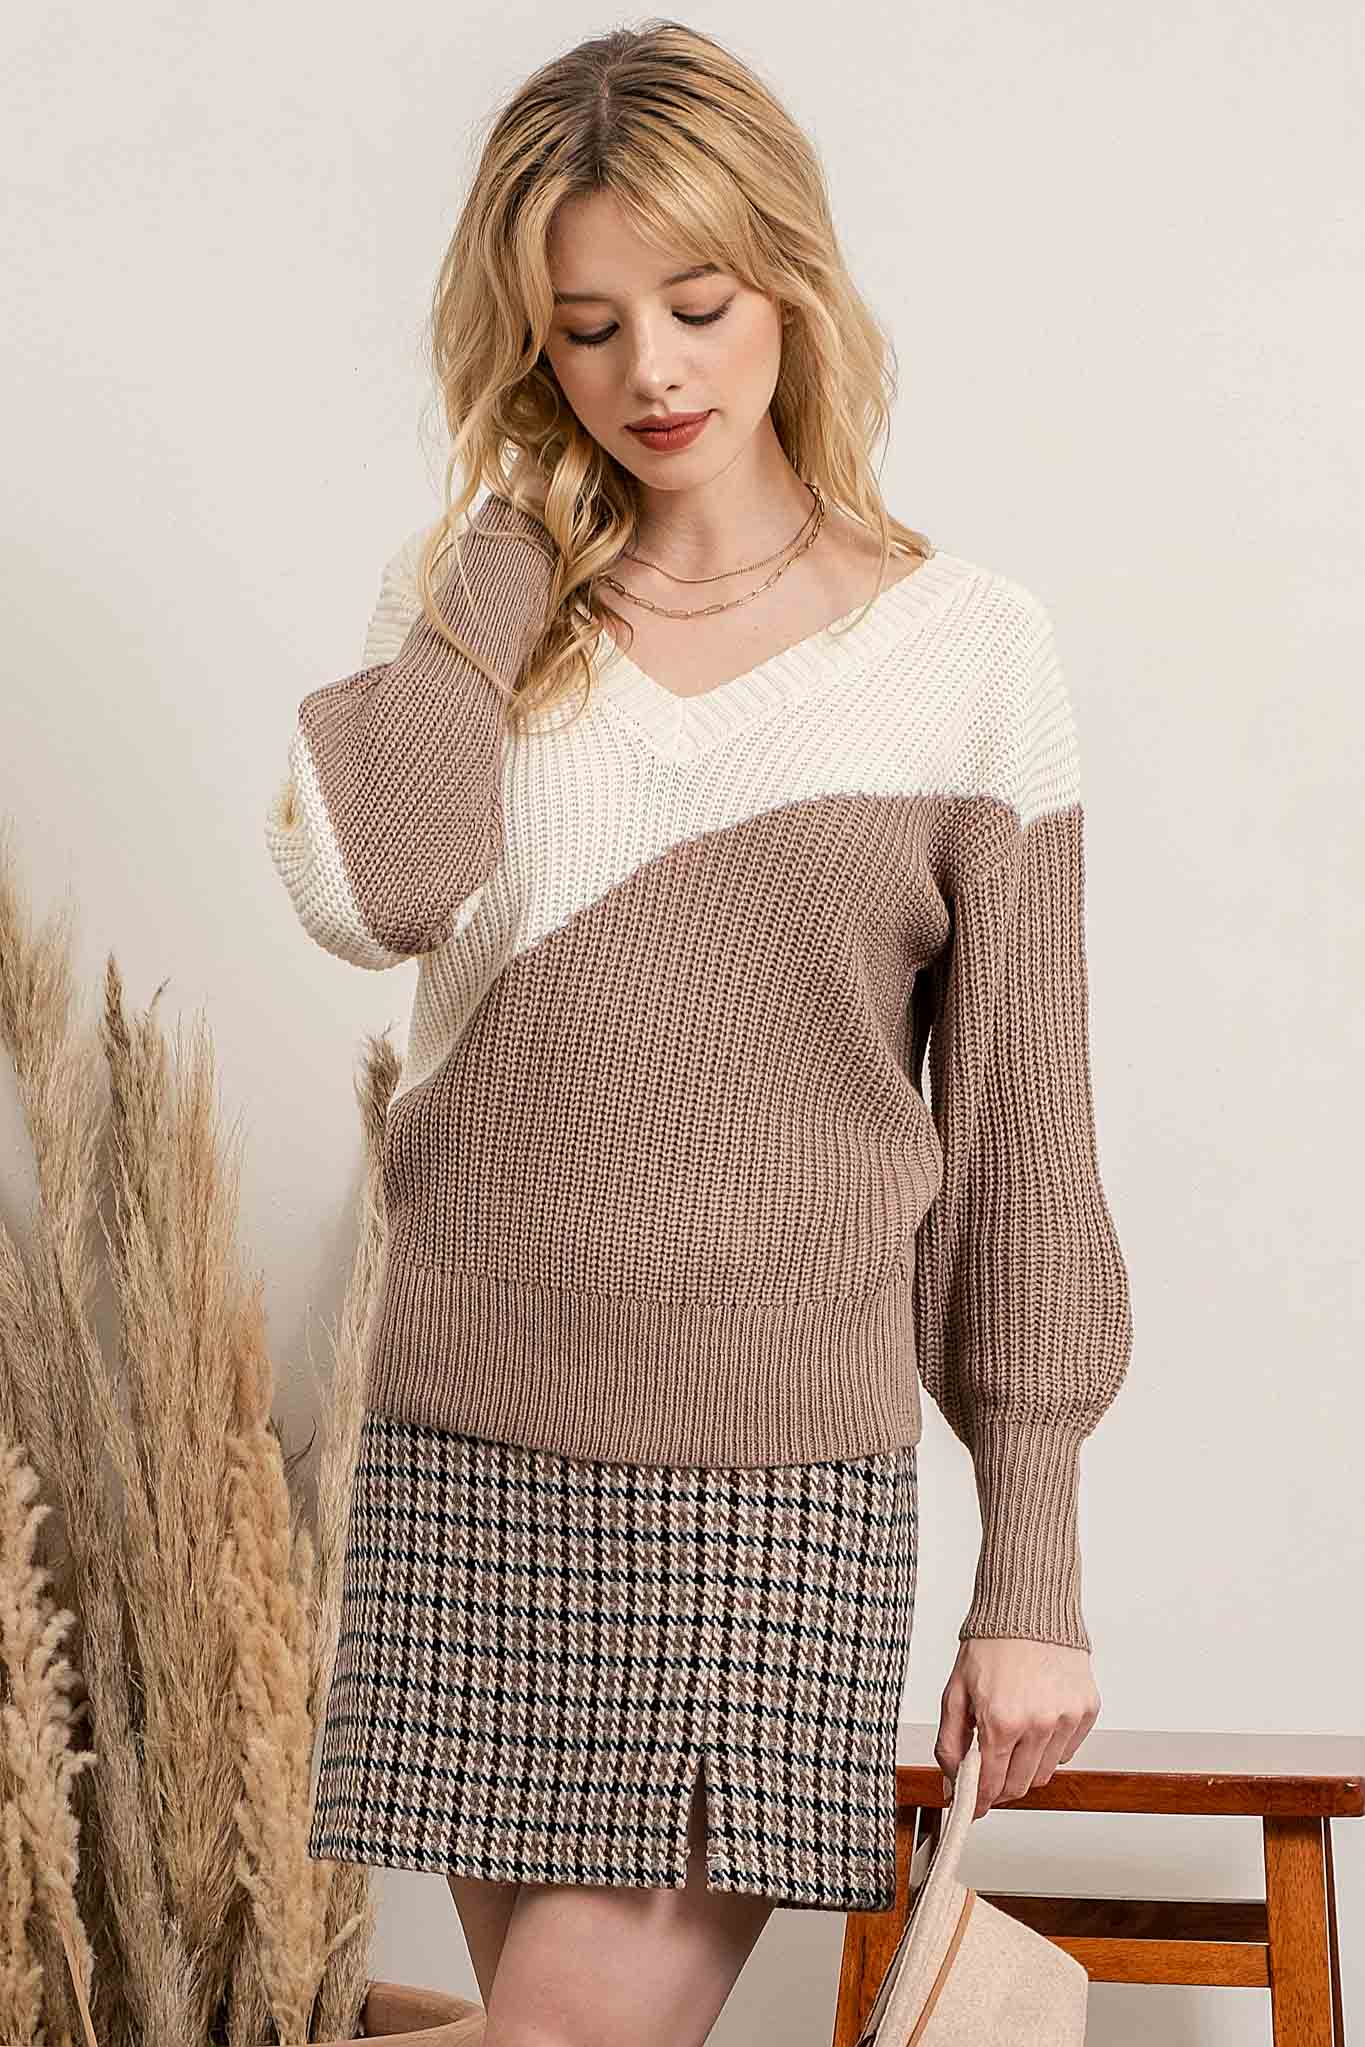 Oatmeal knit colorblock sweater